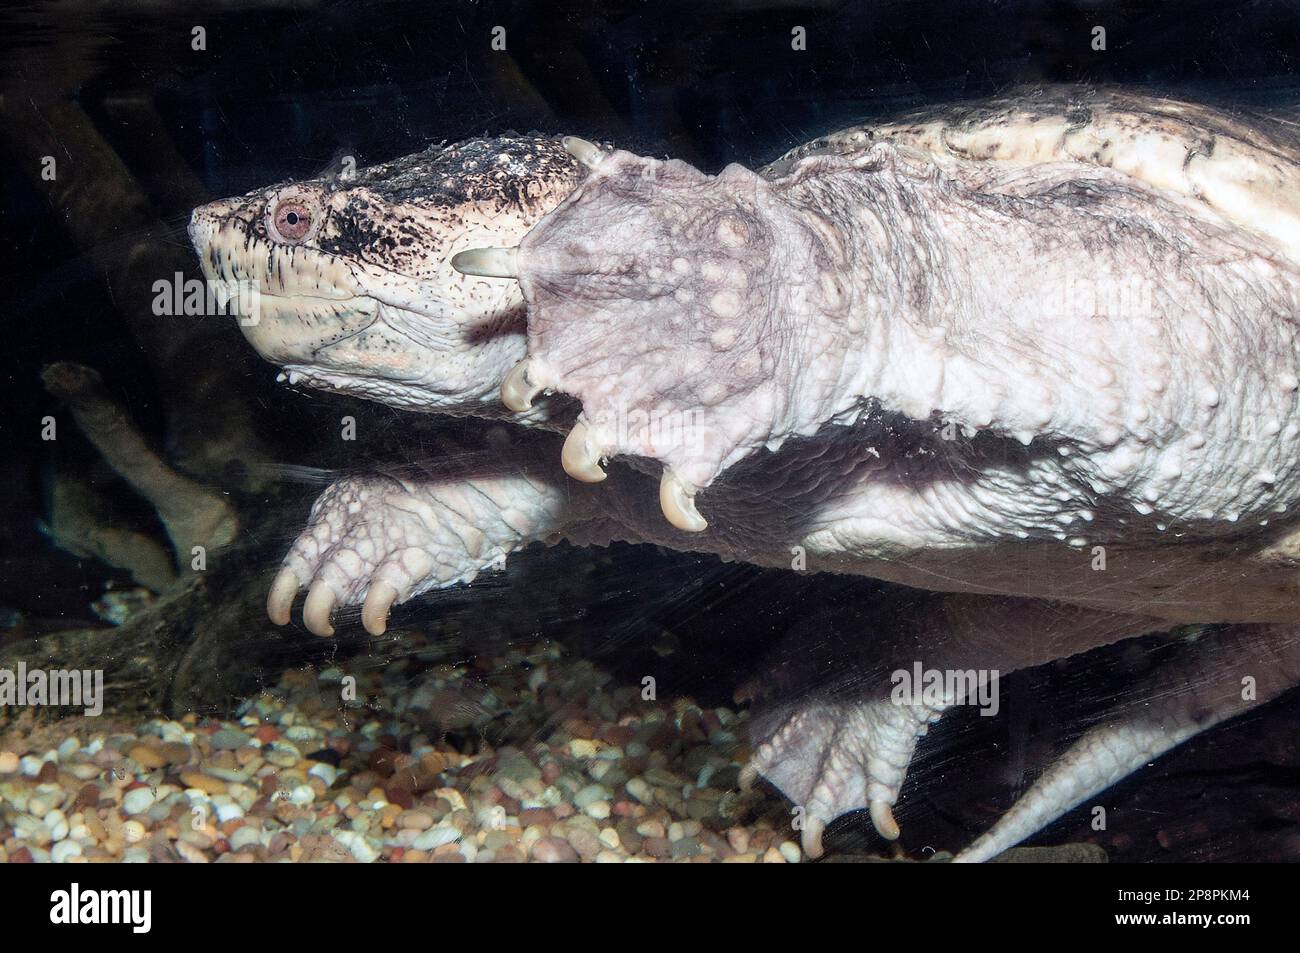 Common spapping turtle facing left, medium shot underwater Stock Photo